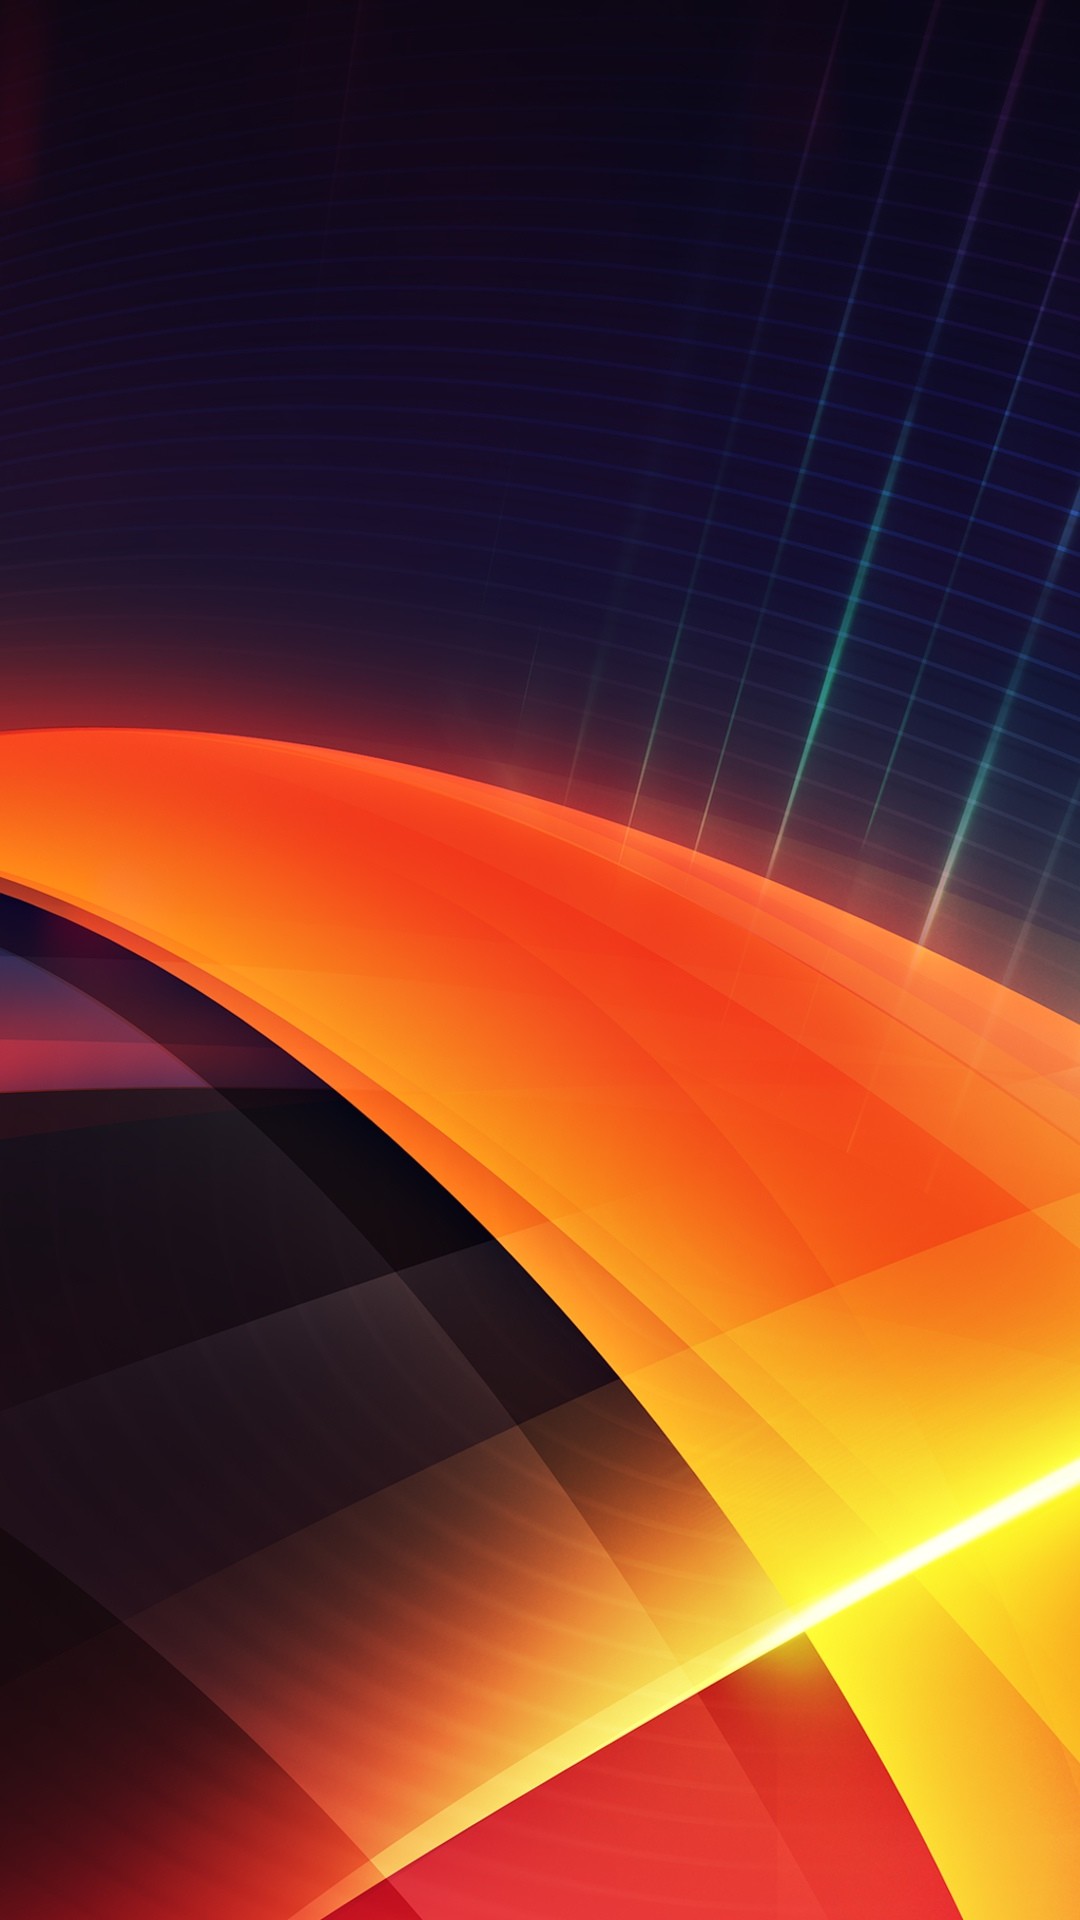 1080x1920 Futuristic Orange Layers Illustration iPhone 6 Plus HD Wallpaper